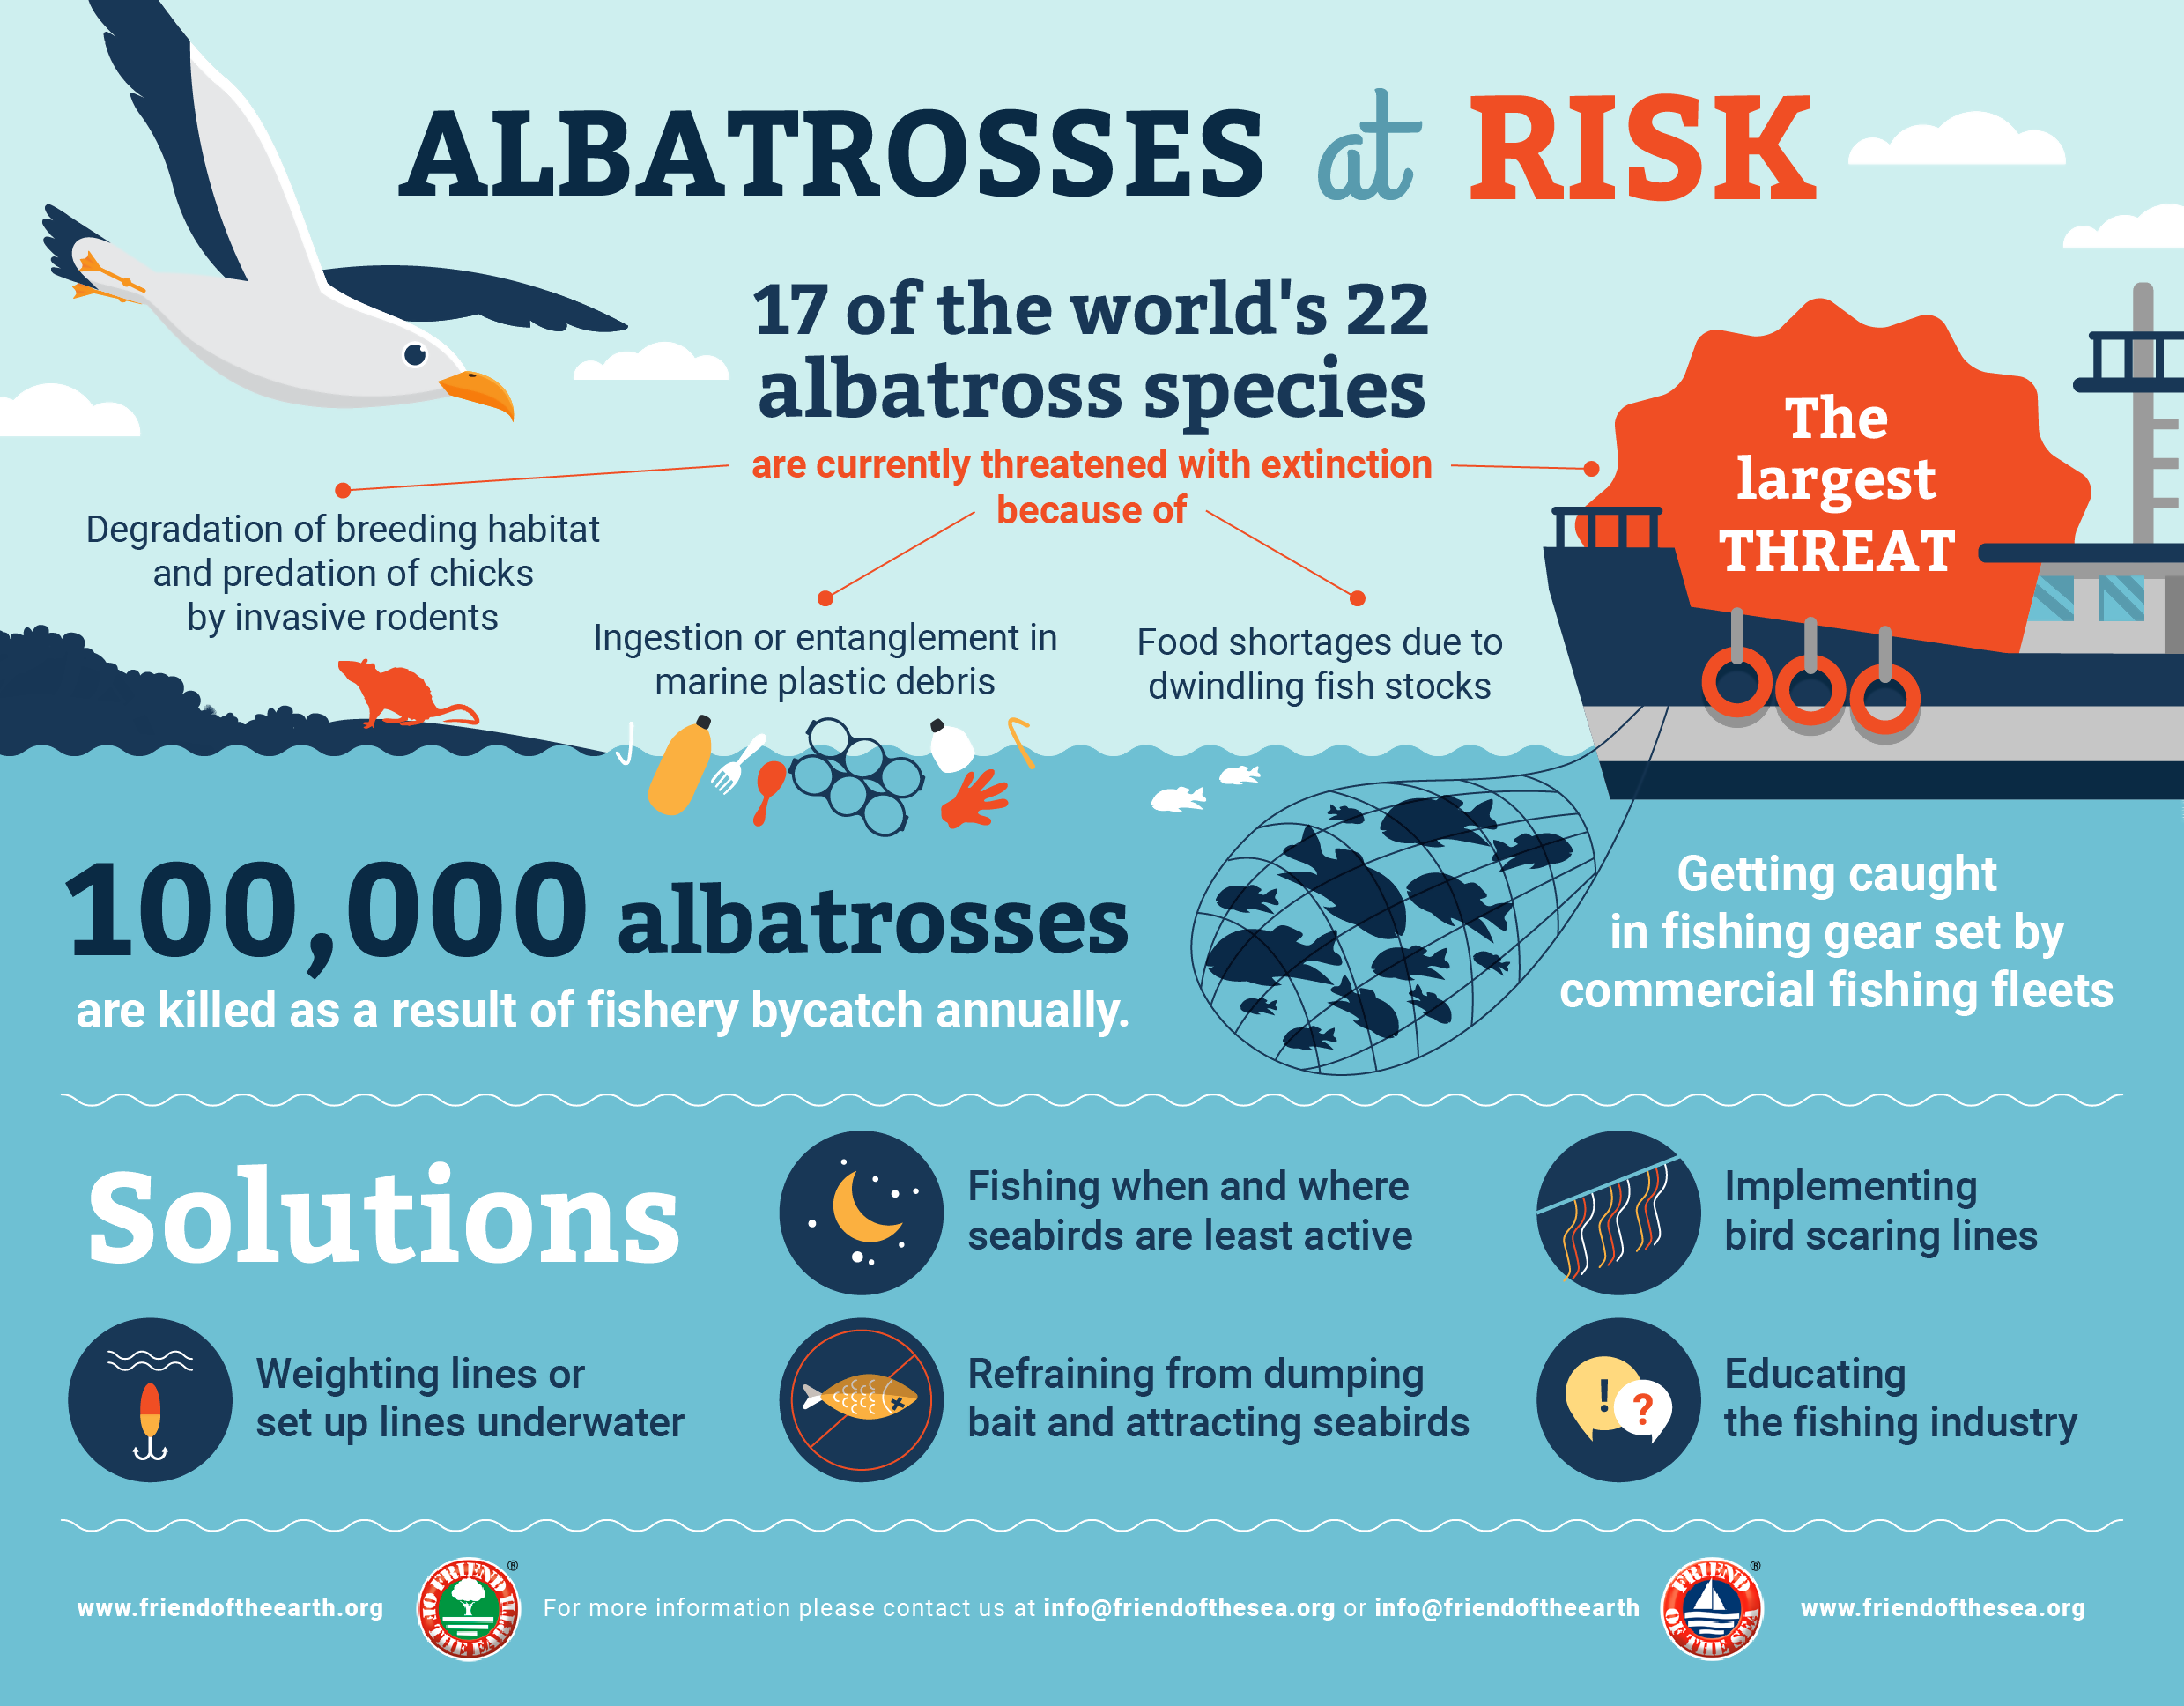 Save the Albatross